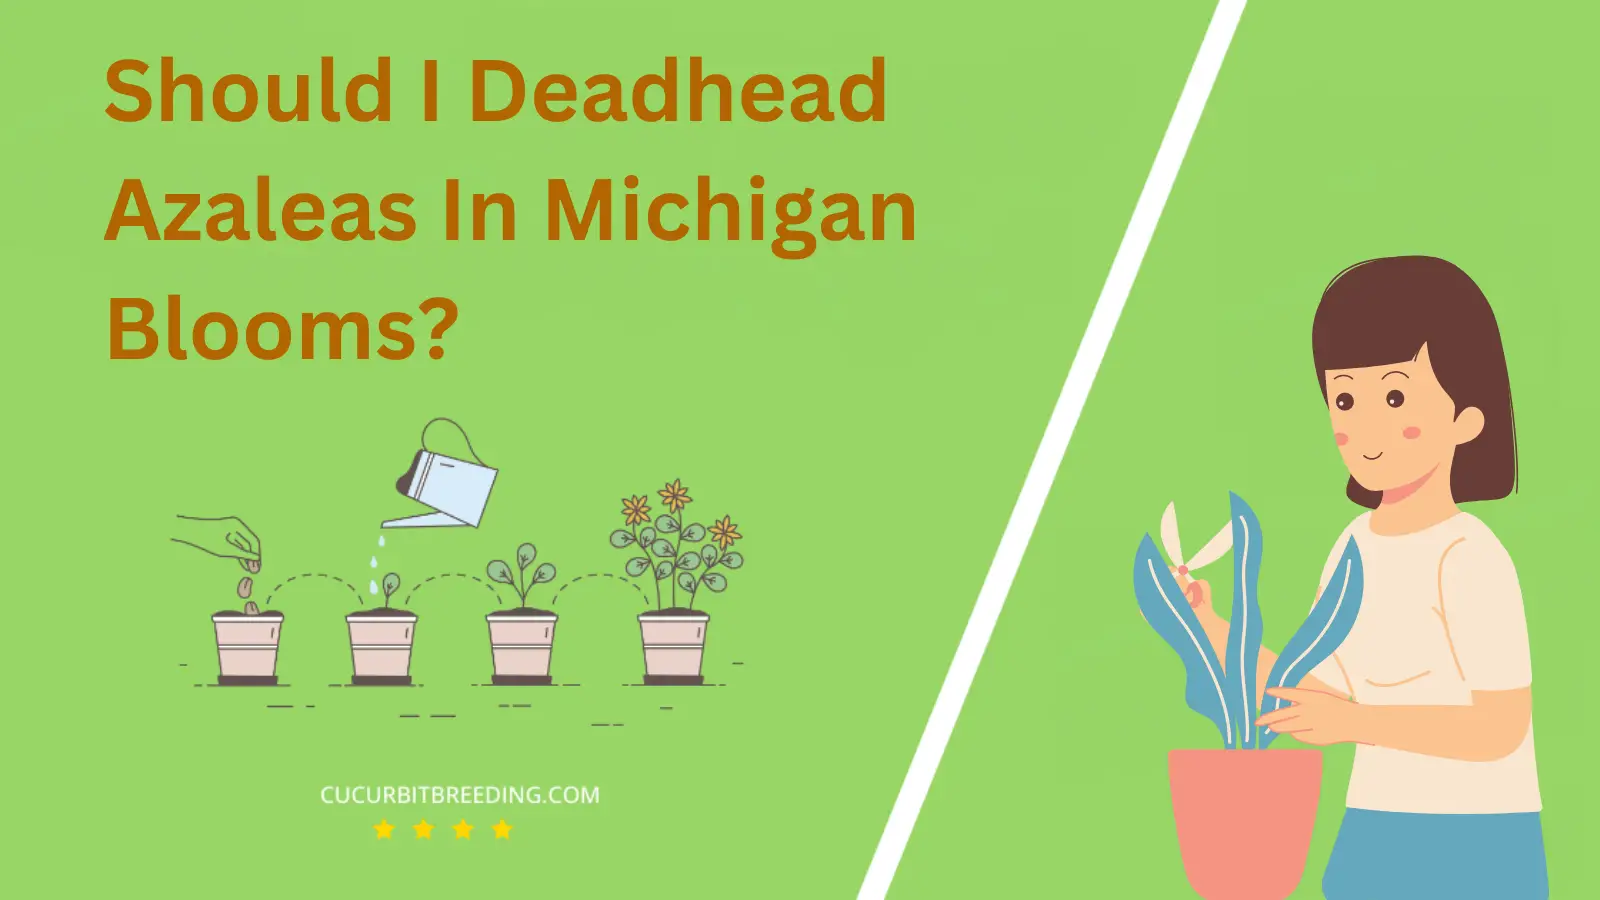 Should I Deadhead Azaleas In Michigan Blooms?